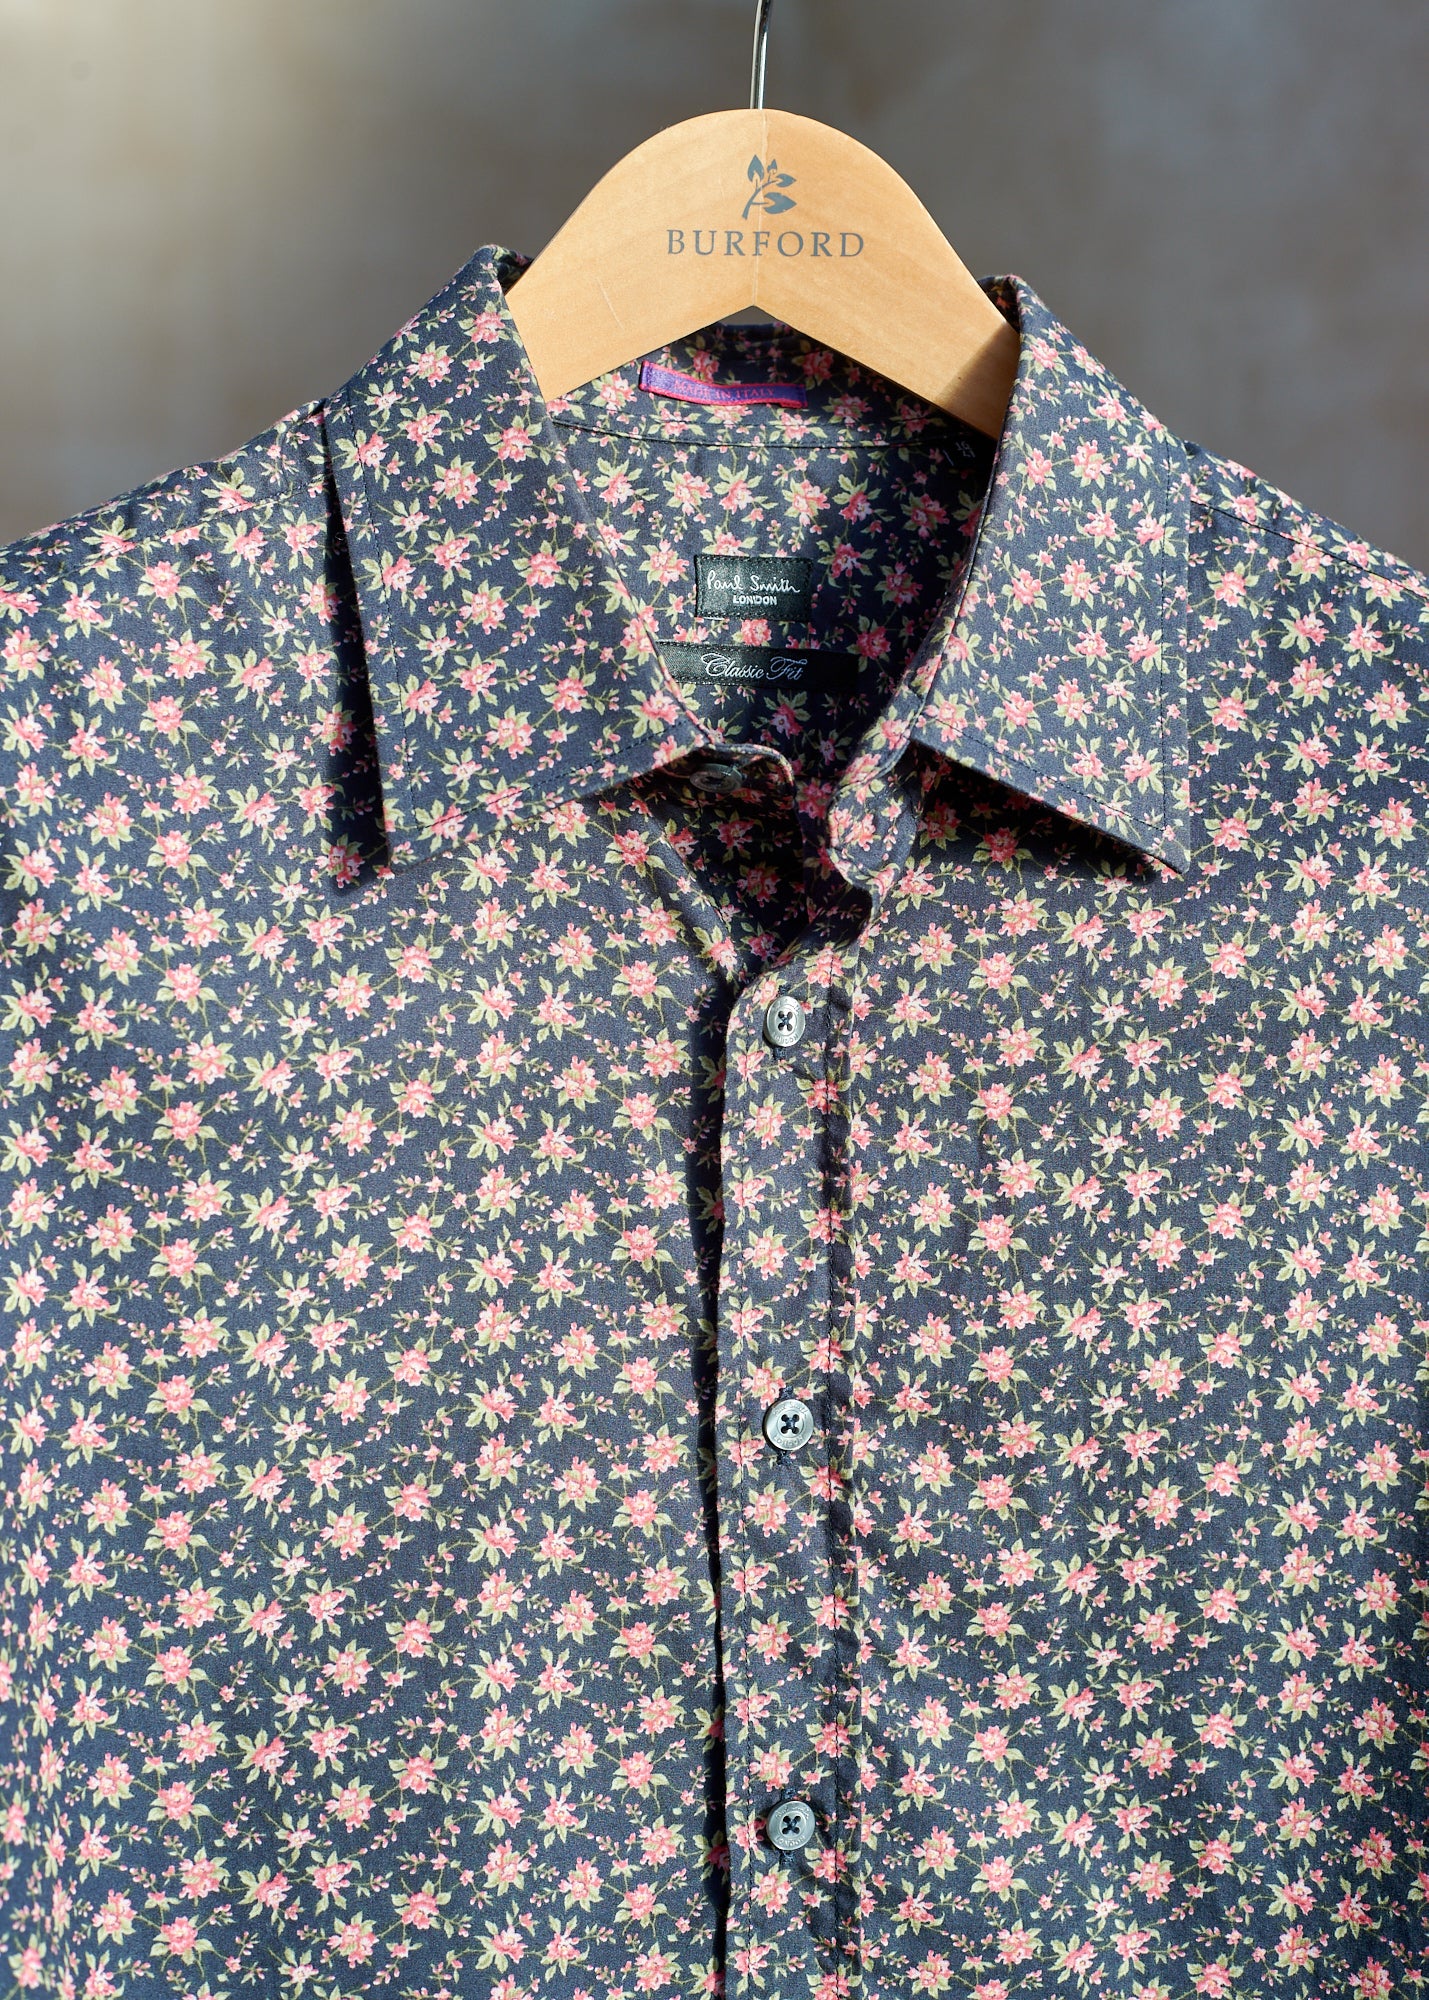 Paul Smith Black/Pink Flower Patterned Cotton Shirt - L